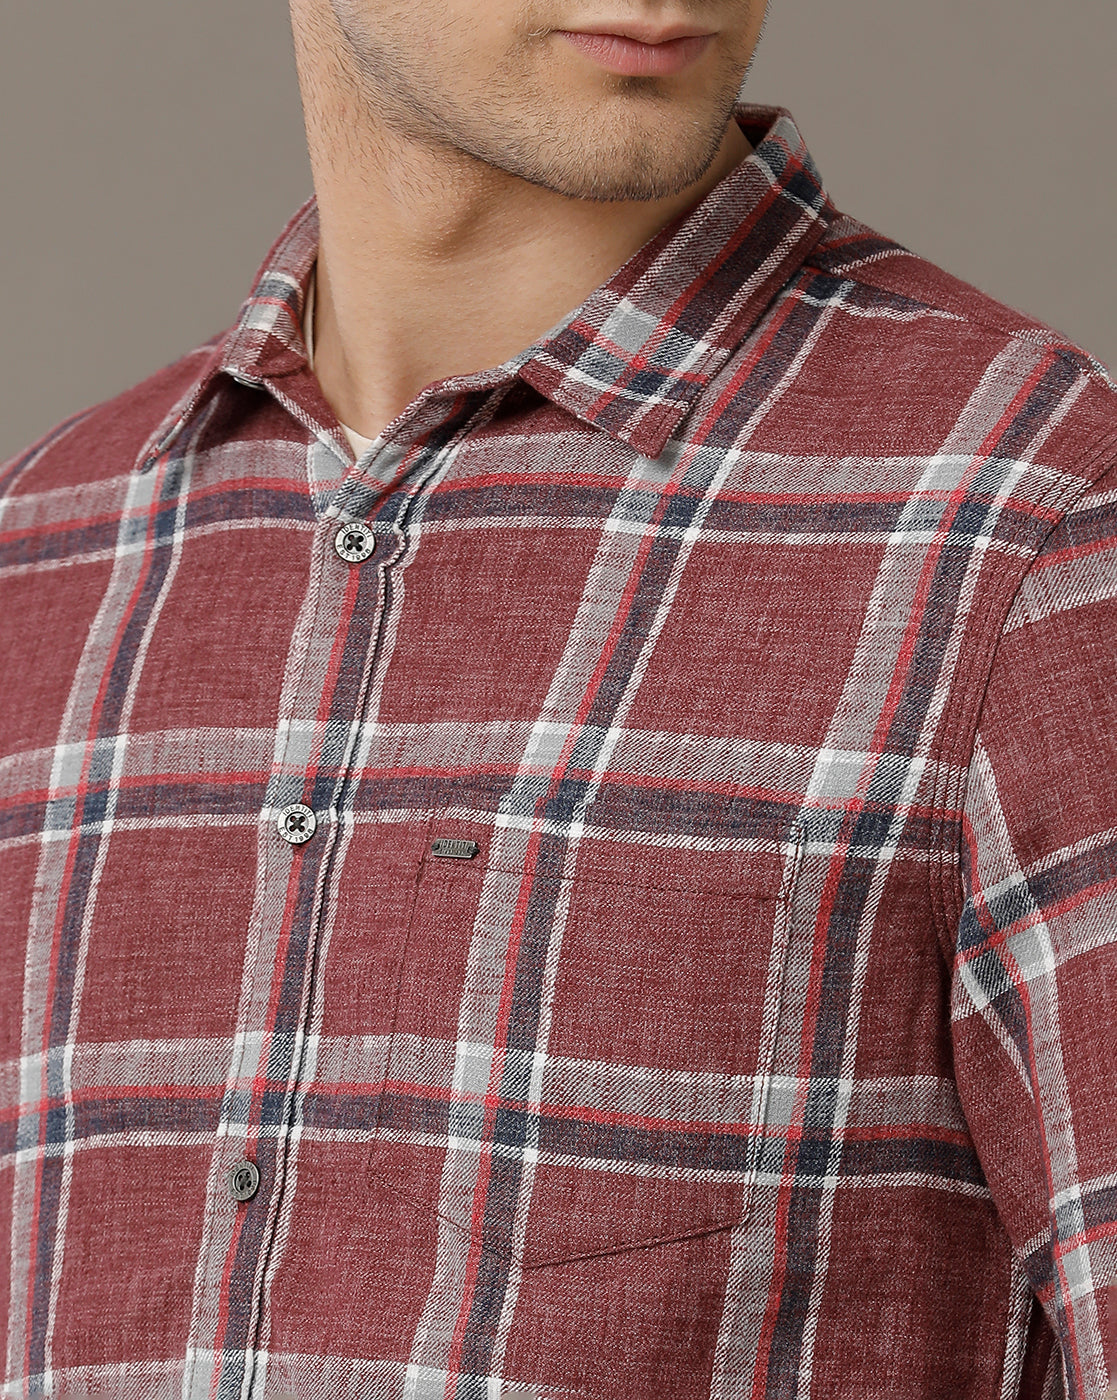 IDENTITI Men Slim Fit Regular Collar Checks Shirt In Maroon Melange.